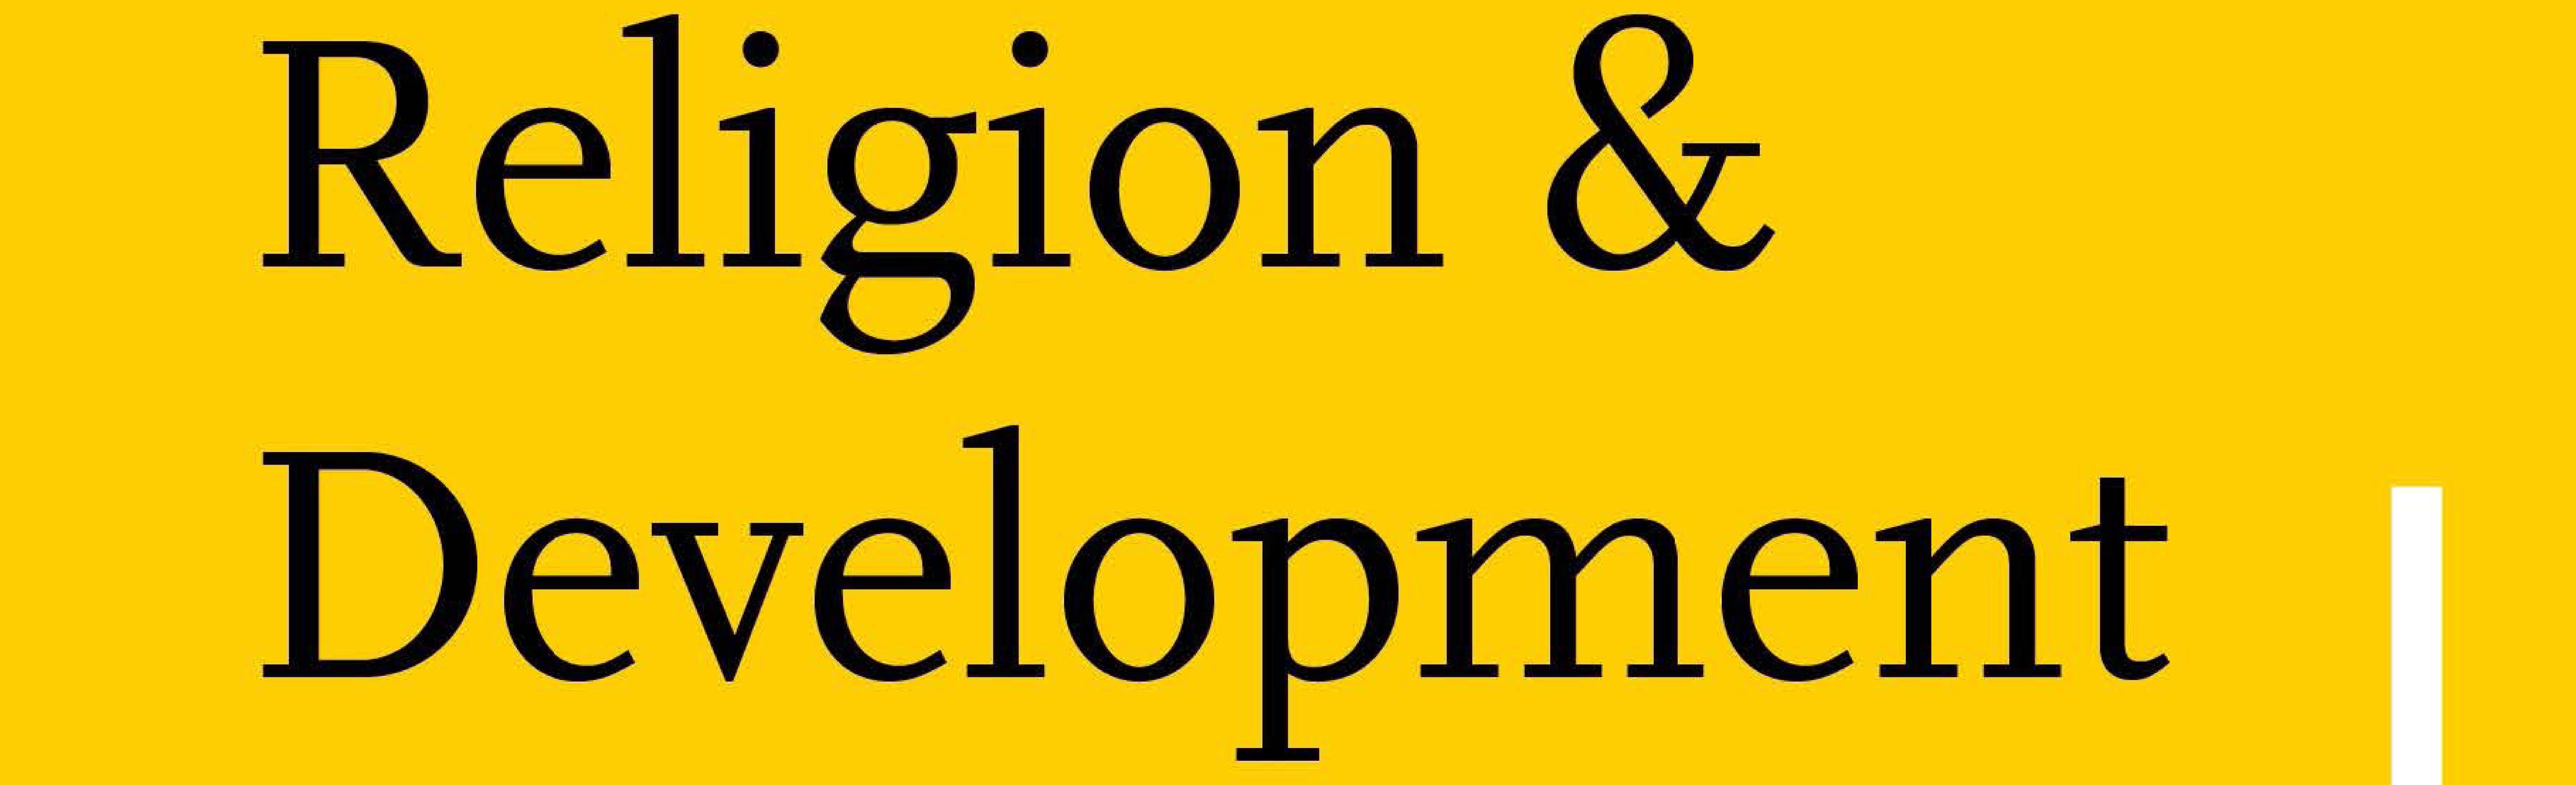 Journal Religion & Development